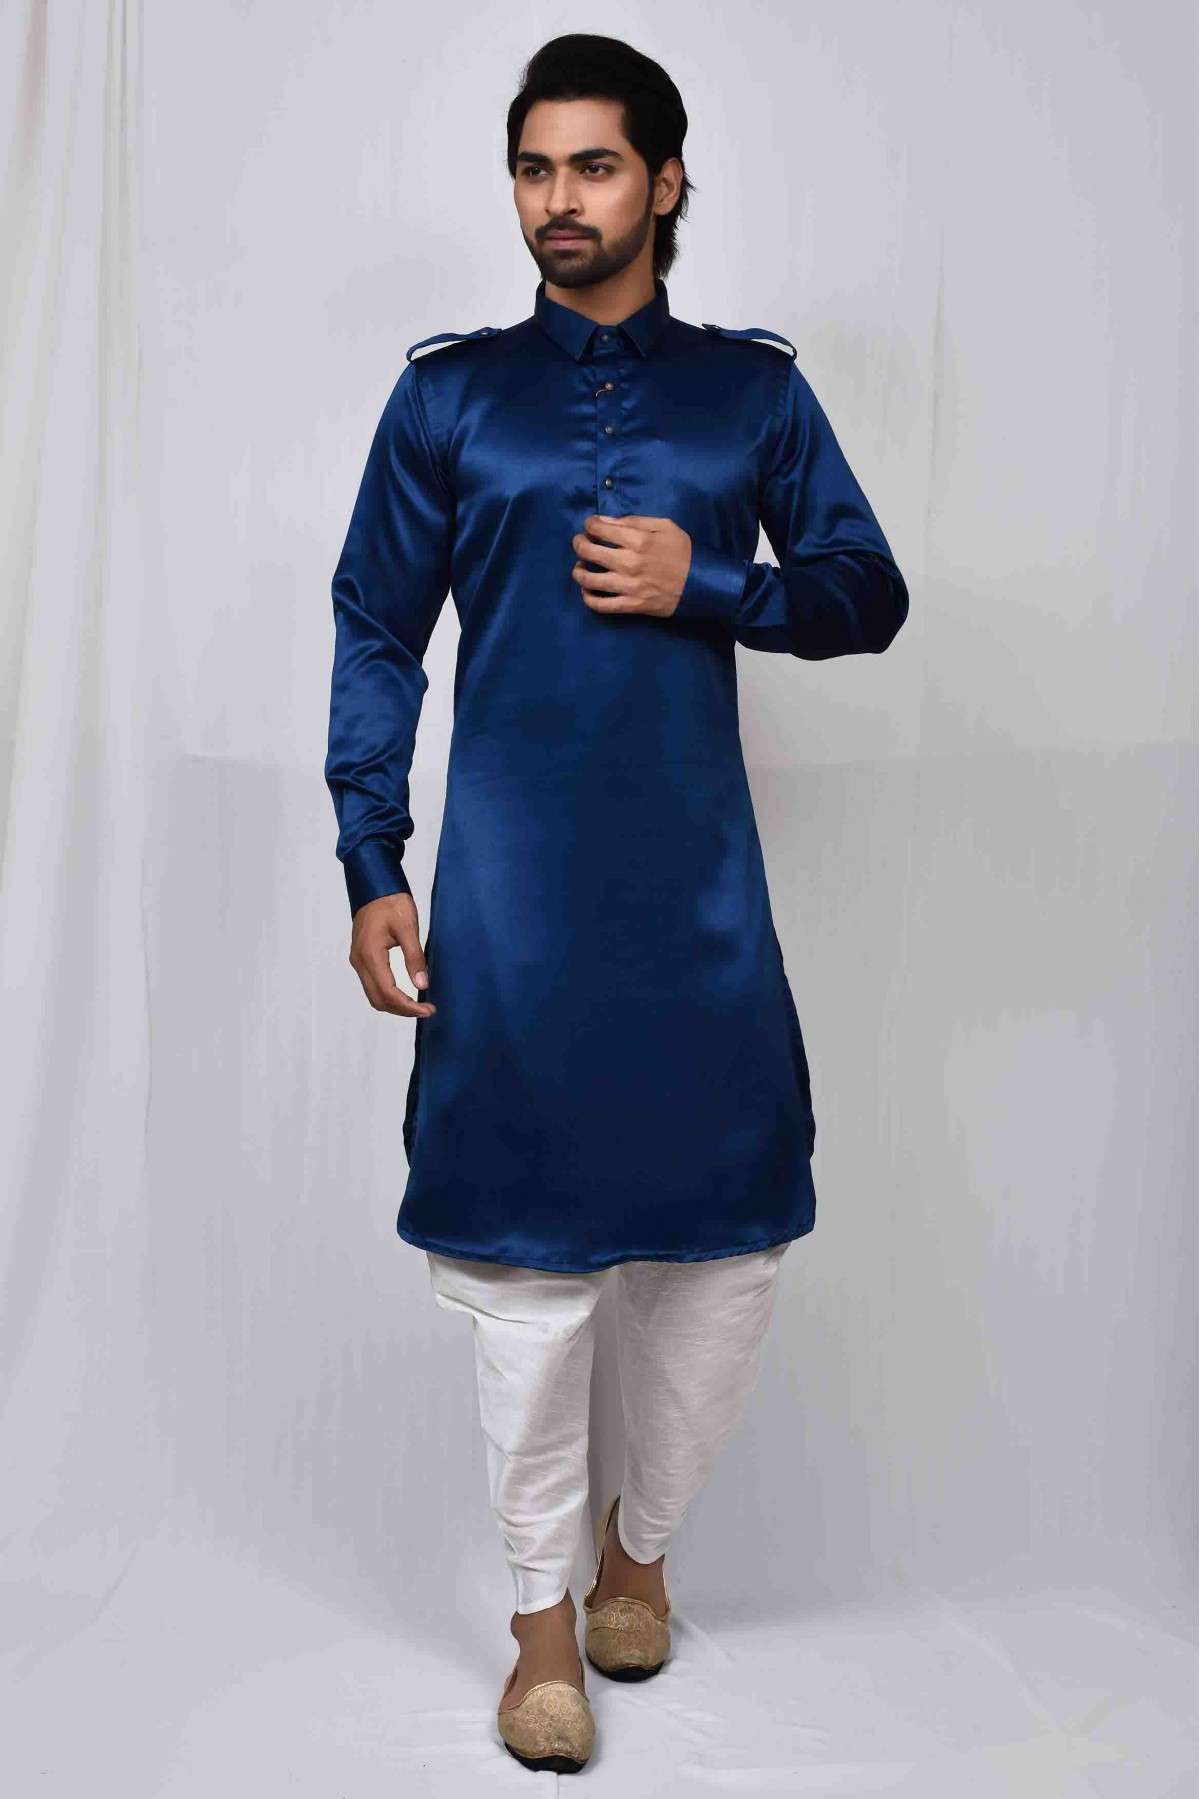 Buy EID PATHANI Suit, Indian Kurta Pajama Set, Casual Salwar Kamiz, Pathani  Salwar Suit, Casual Kurta Pajama Set, High and Best 100% Cotton Suit Online  in India - Etsy